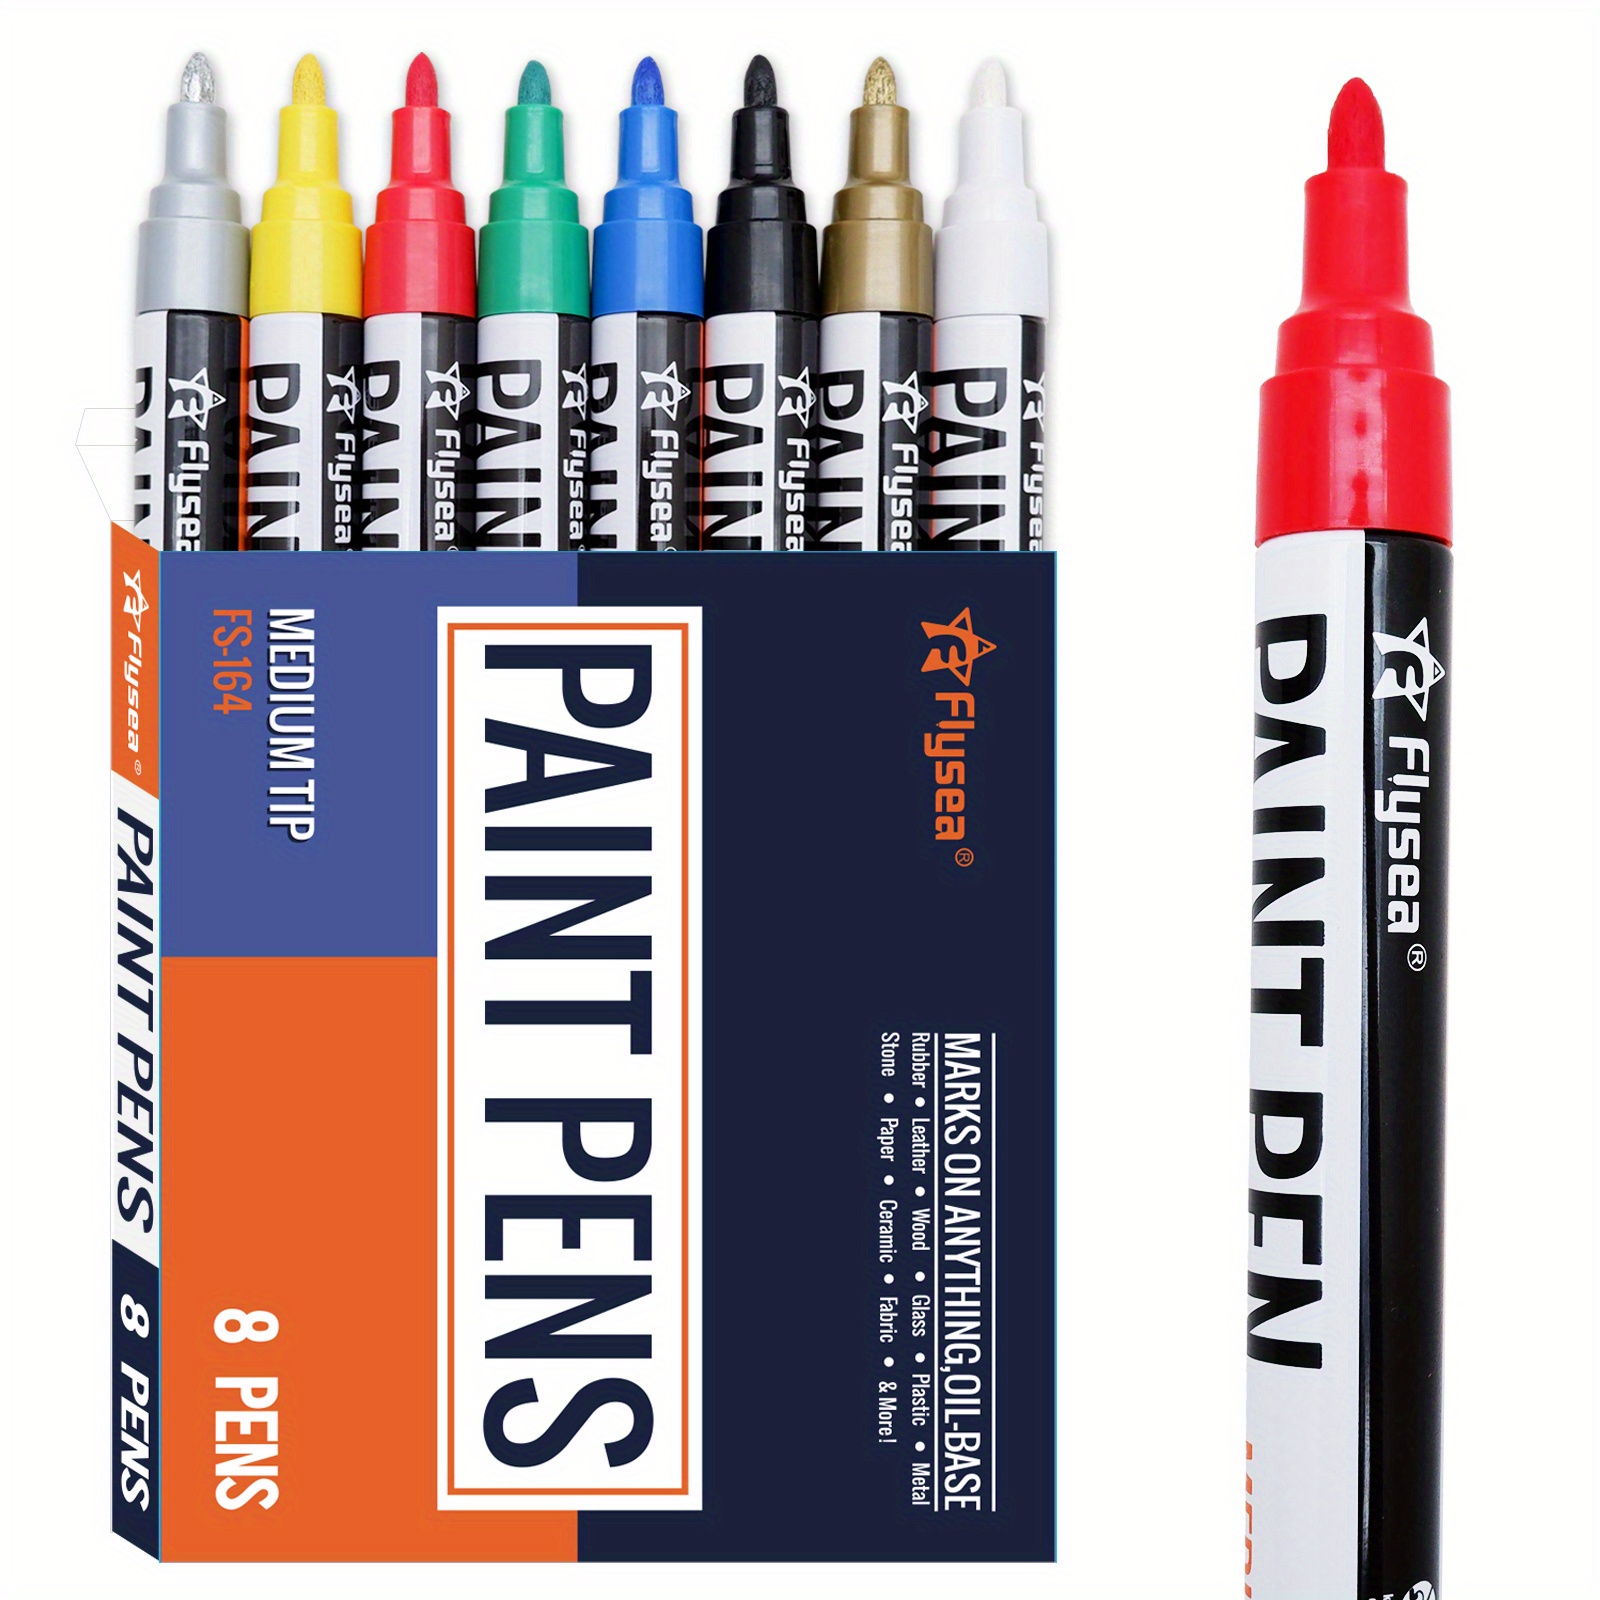 Acrylic Paint Pens 24 Colors Fabric Permanent Paint Markers Quick